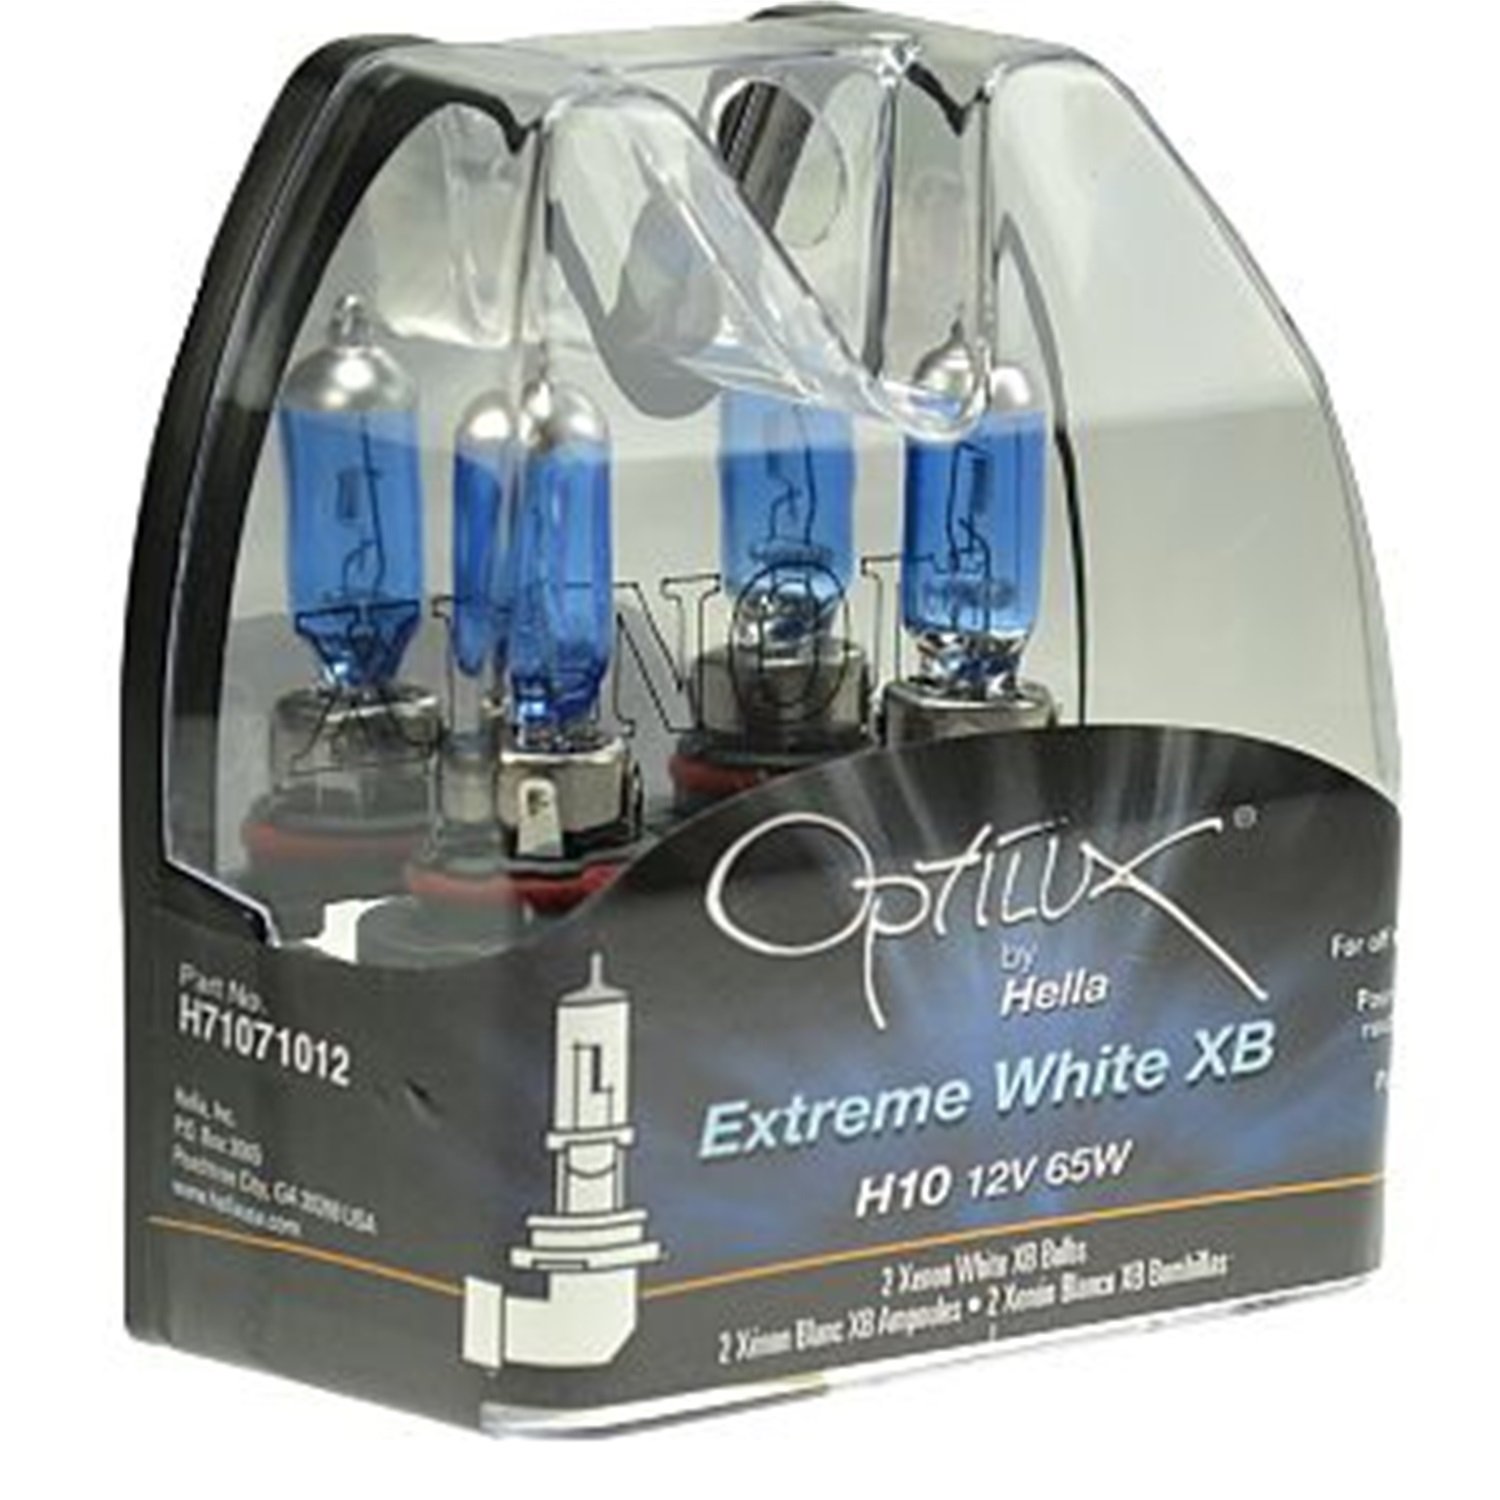 Optilux Extreme White XB Bulbs Bulb Type: HB4/9006